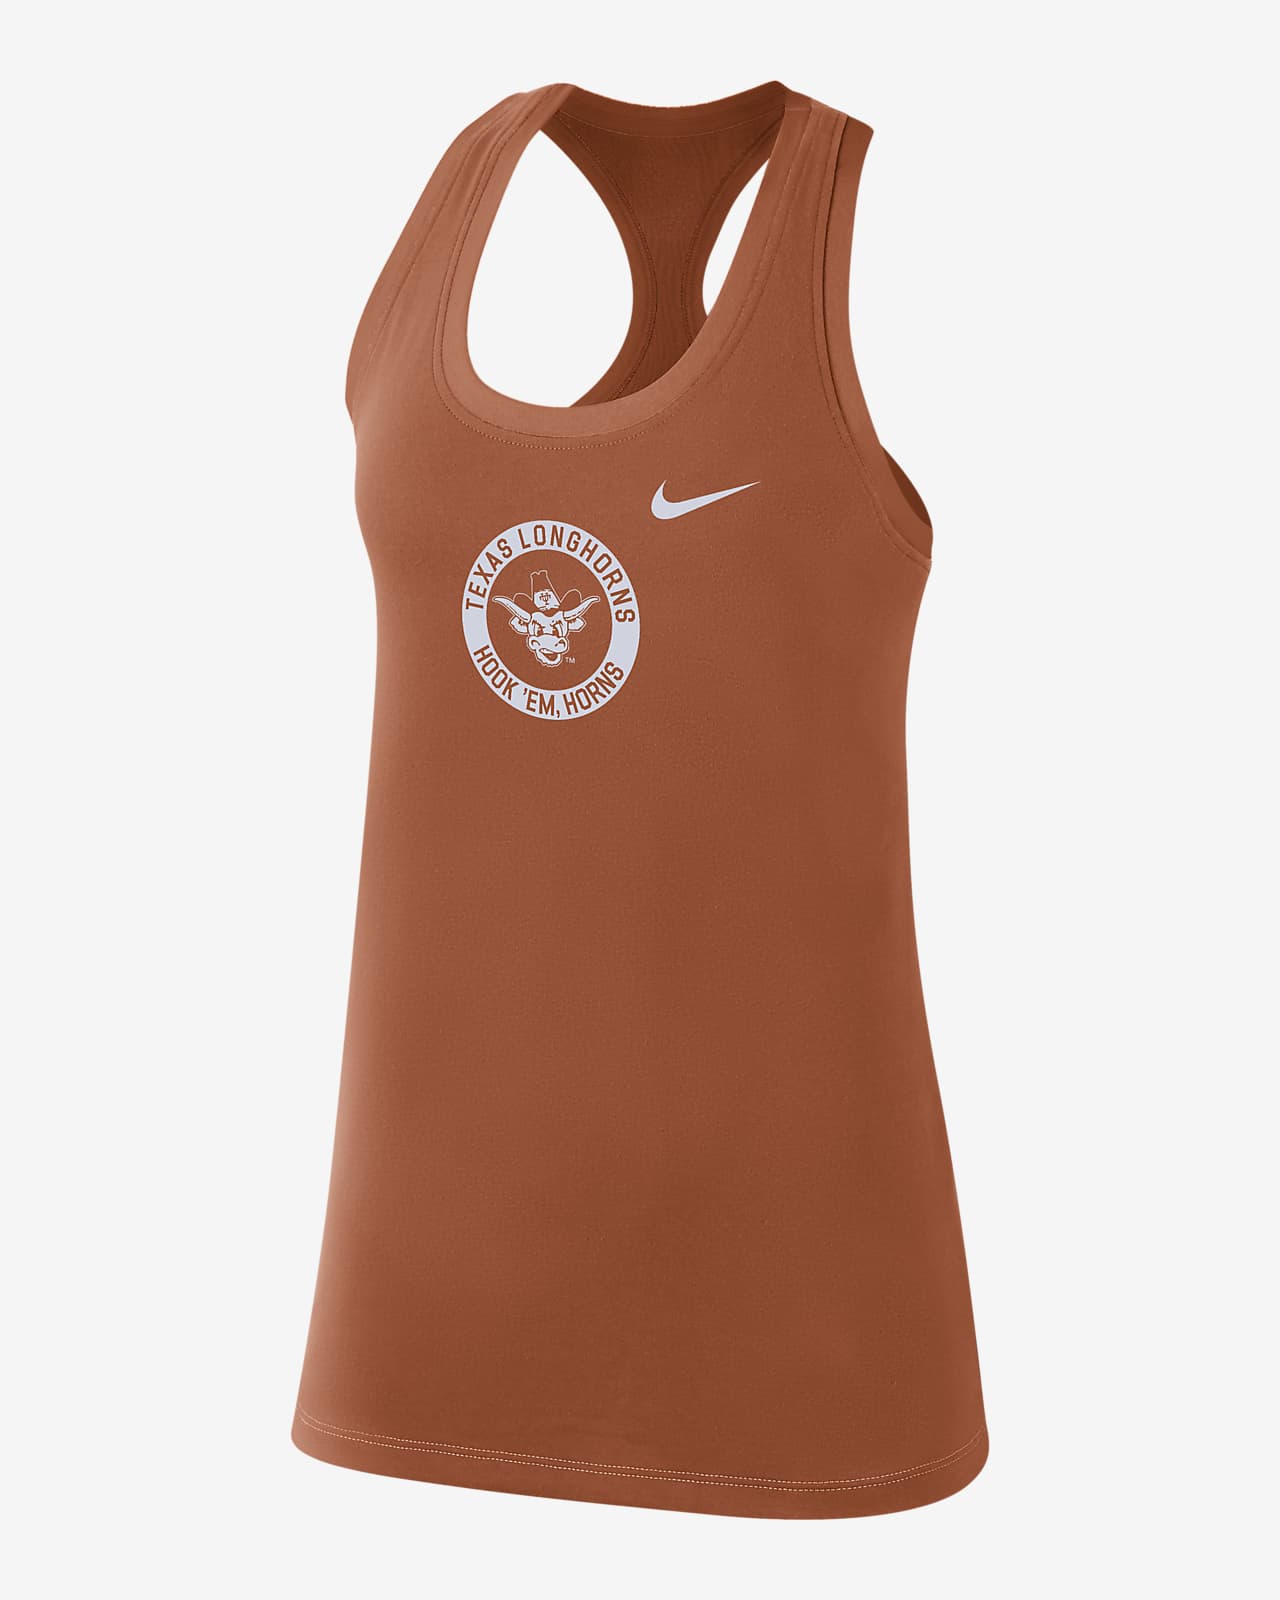 Camiseta de tirantes universitaria Nike para mujer Texas